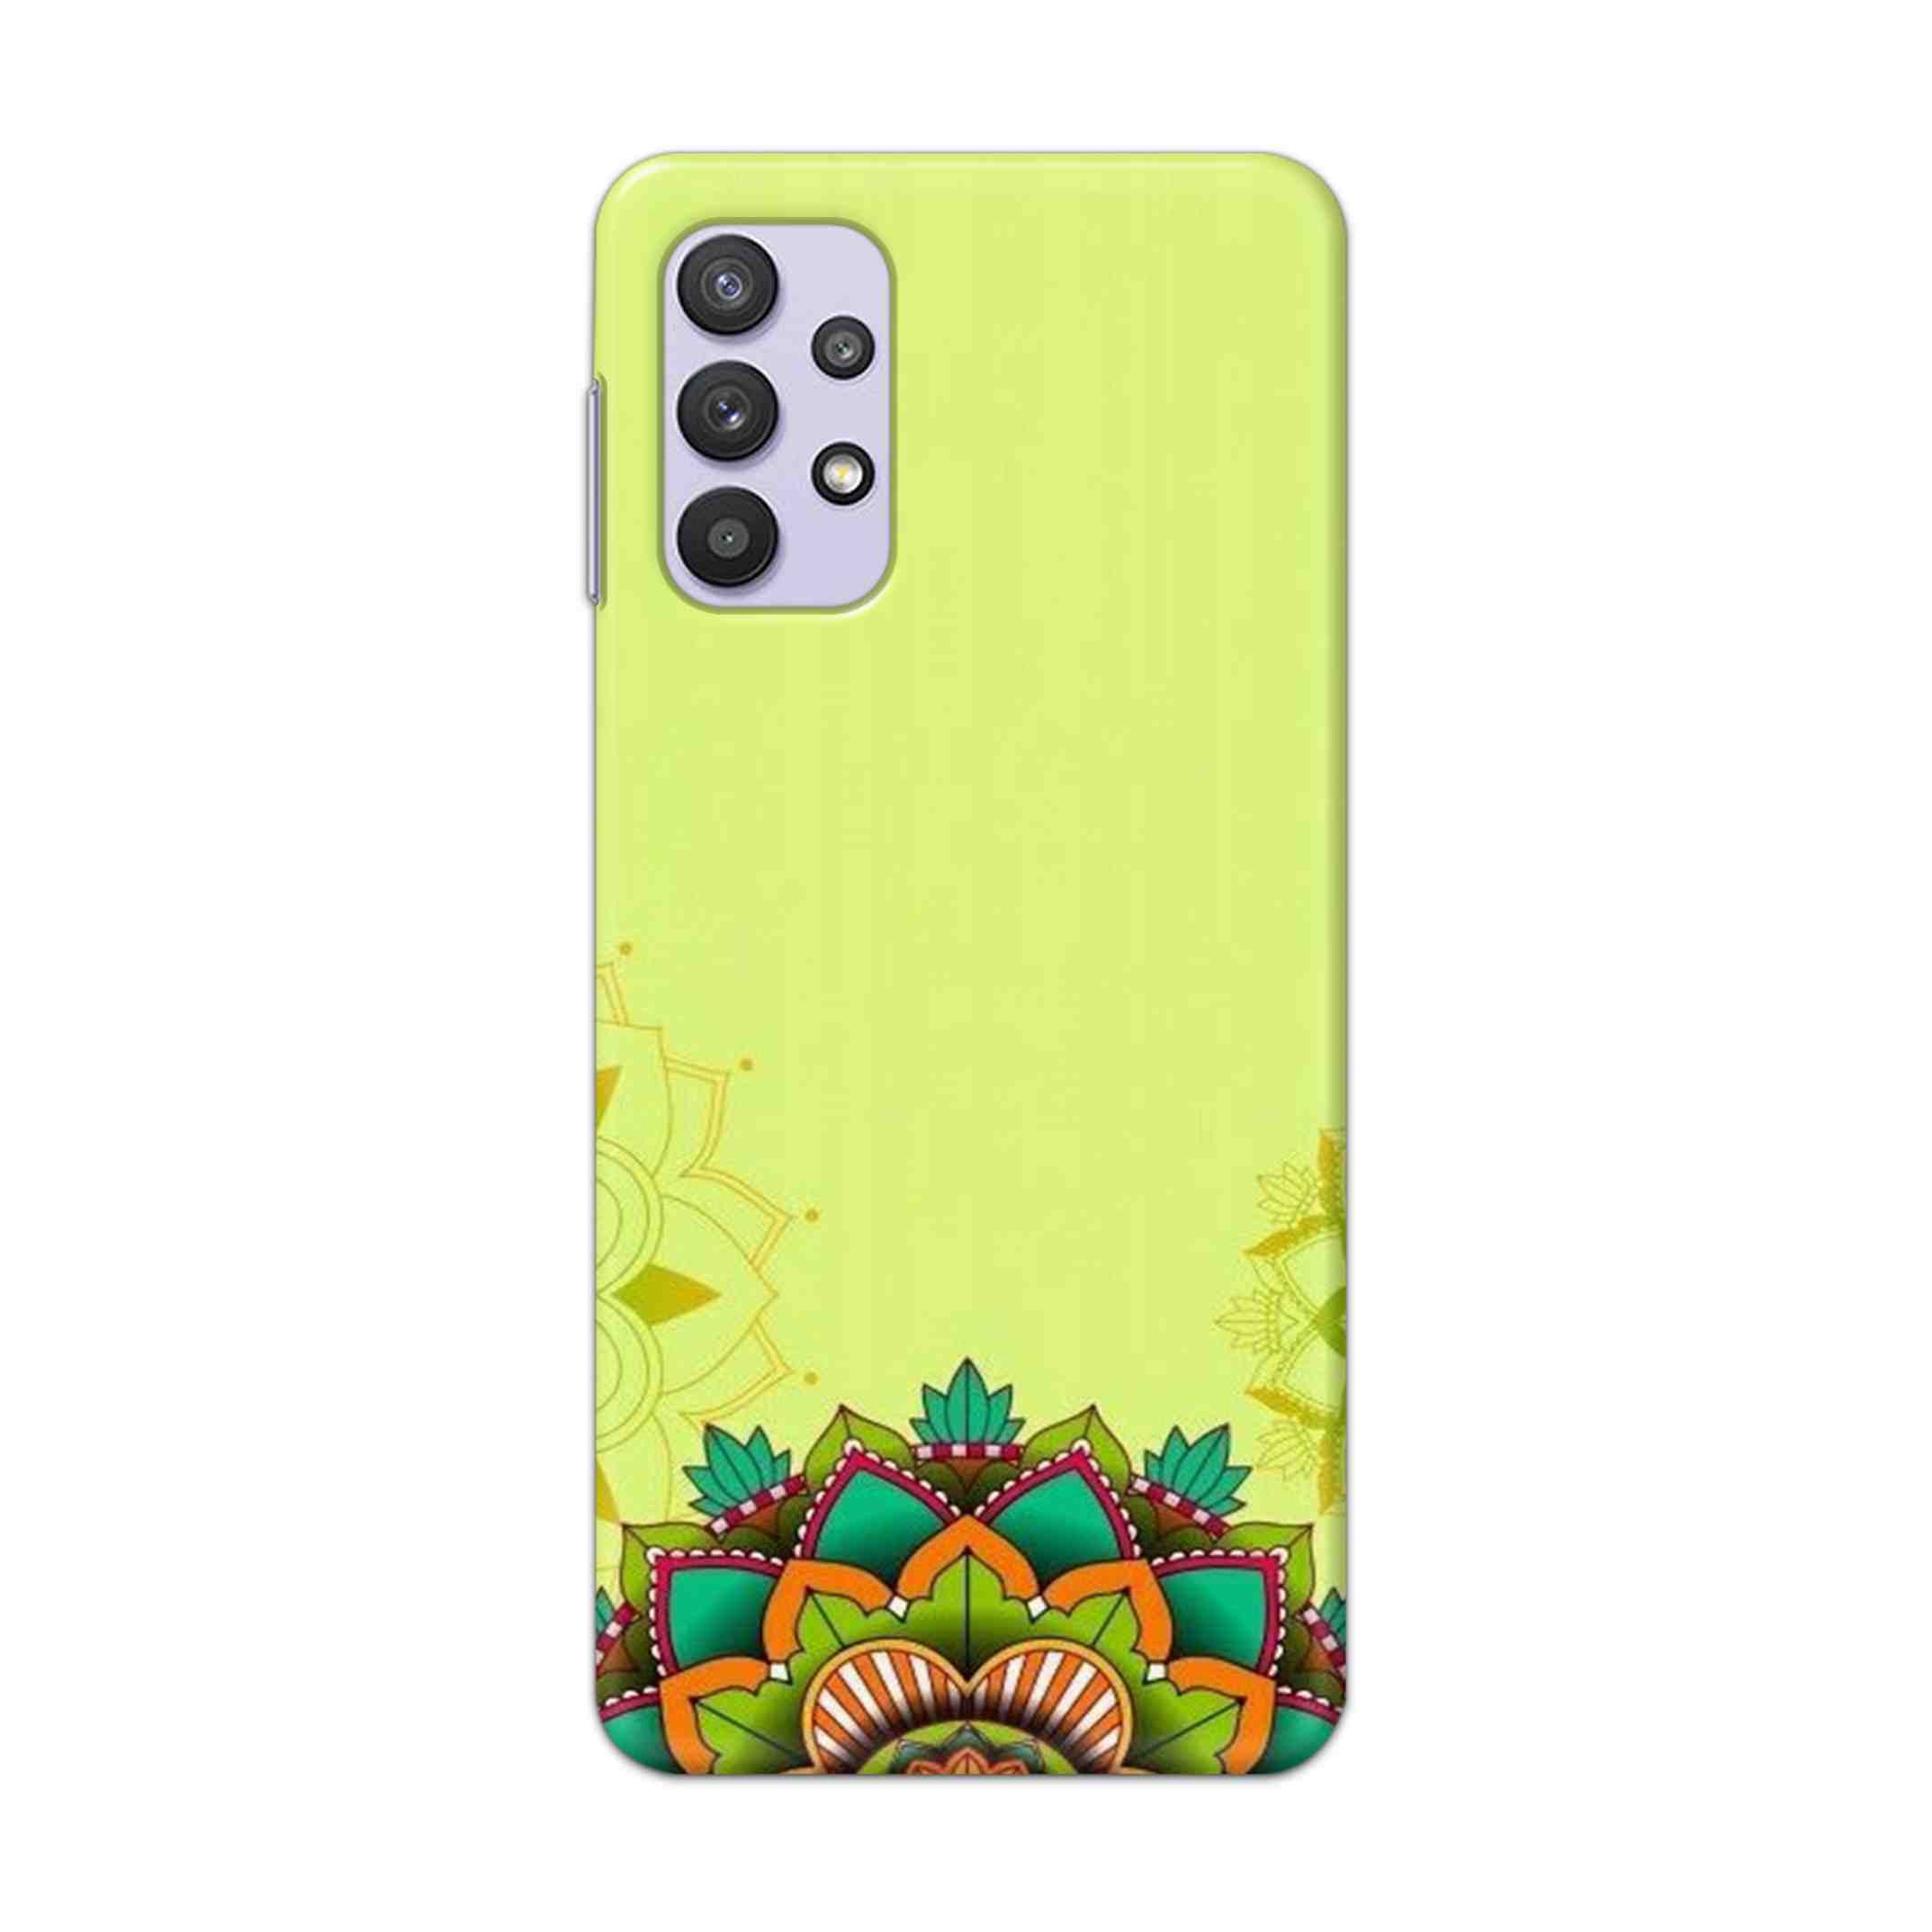 Buy Flower Mandala Hard Back Mobile Phone Case Cover For Samsung A32 5G Online